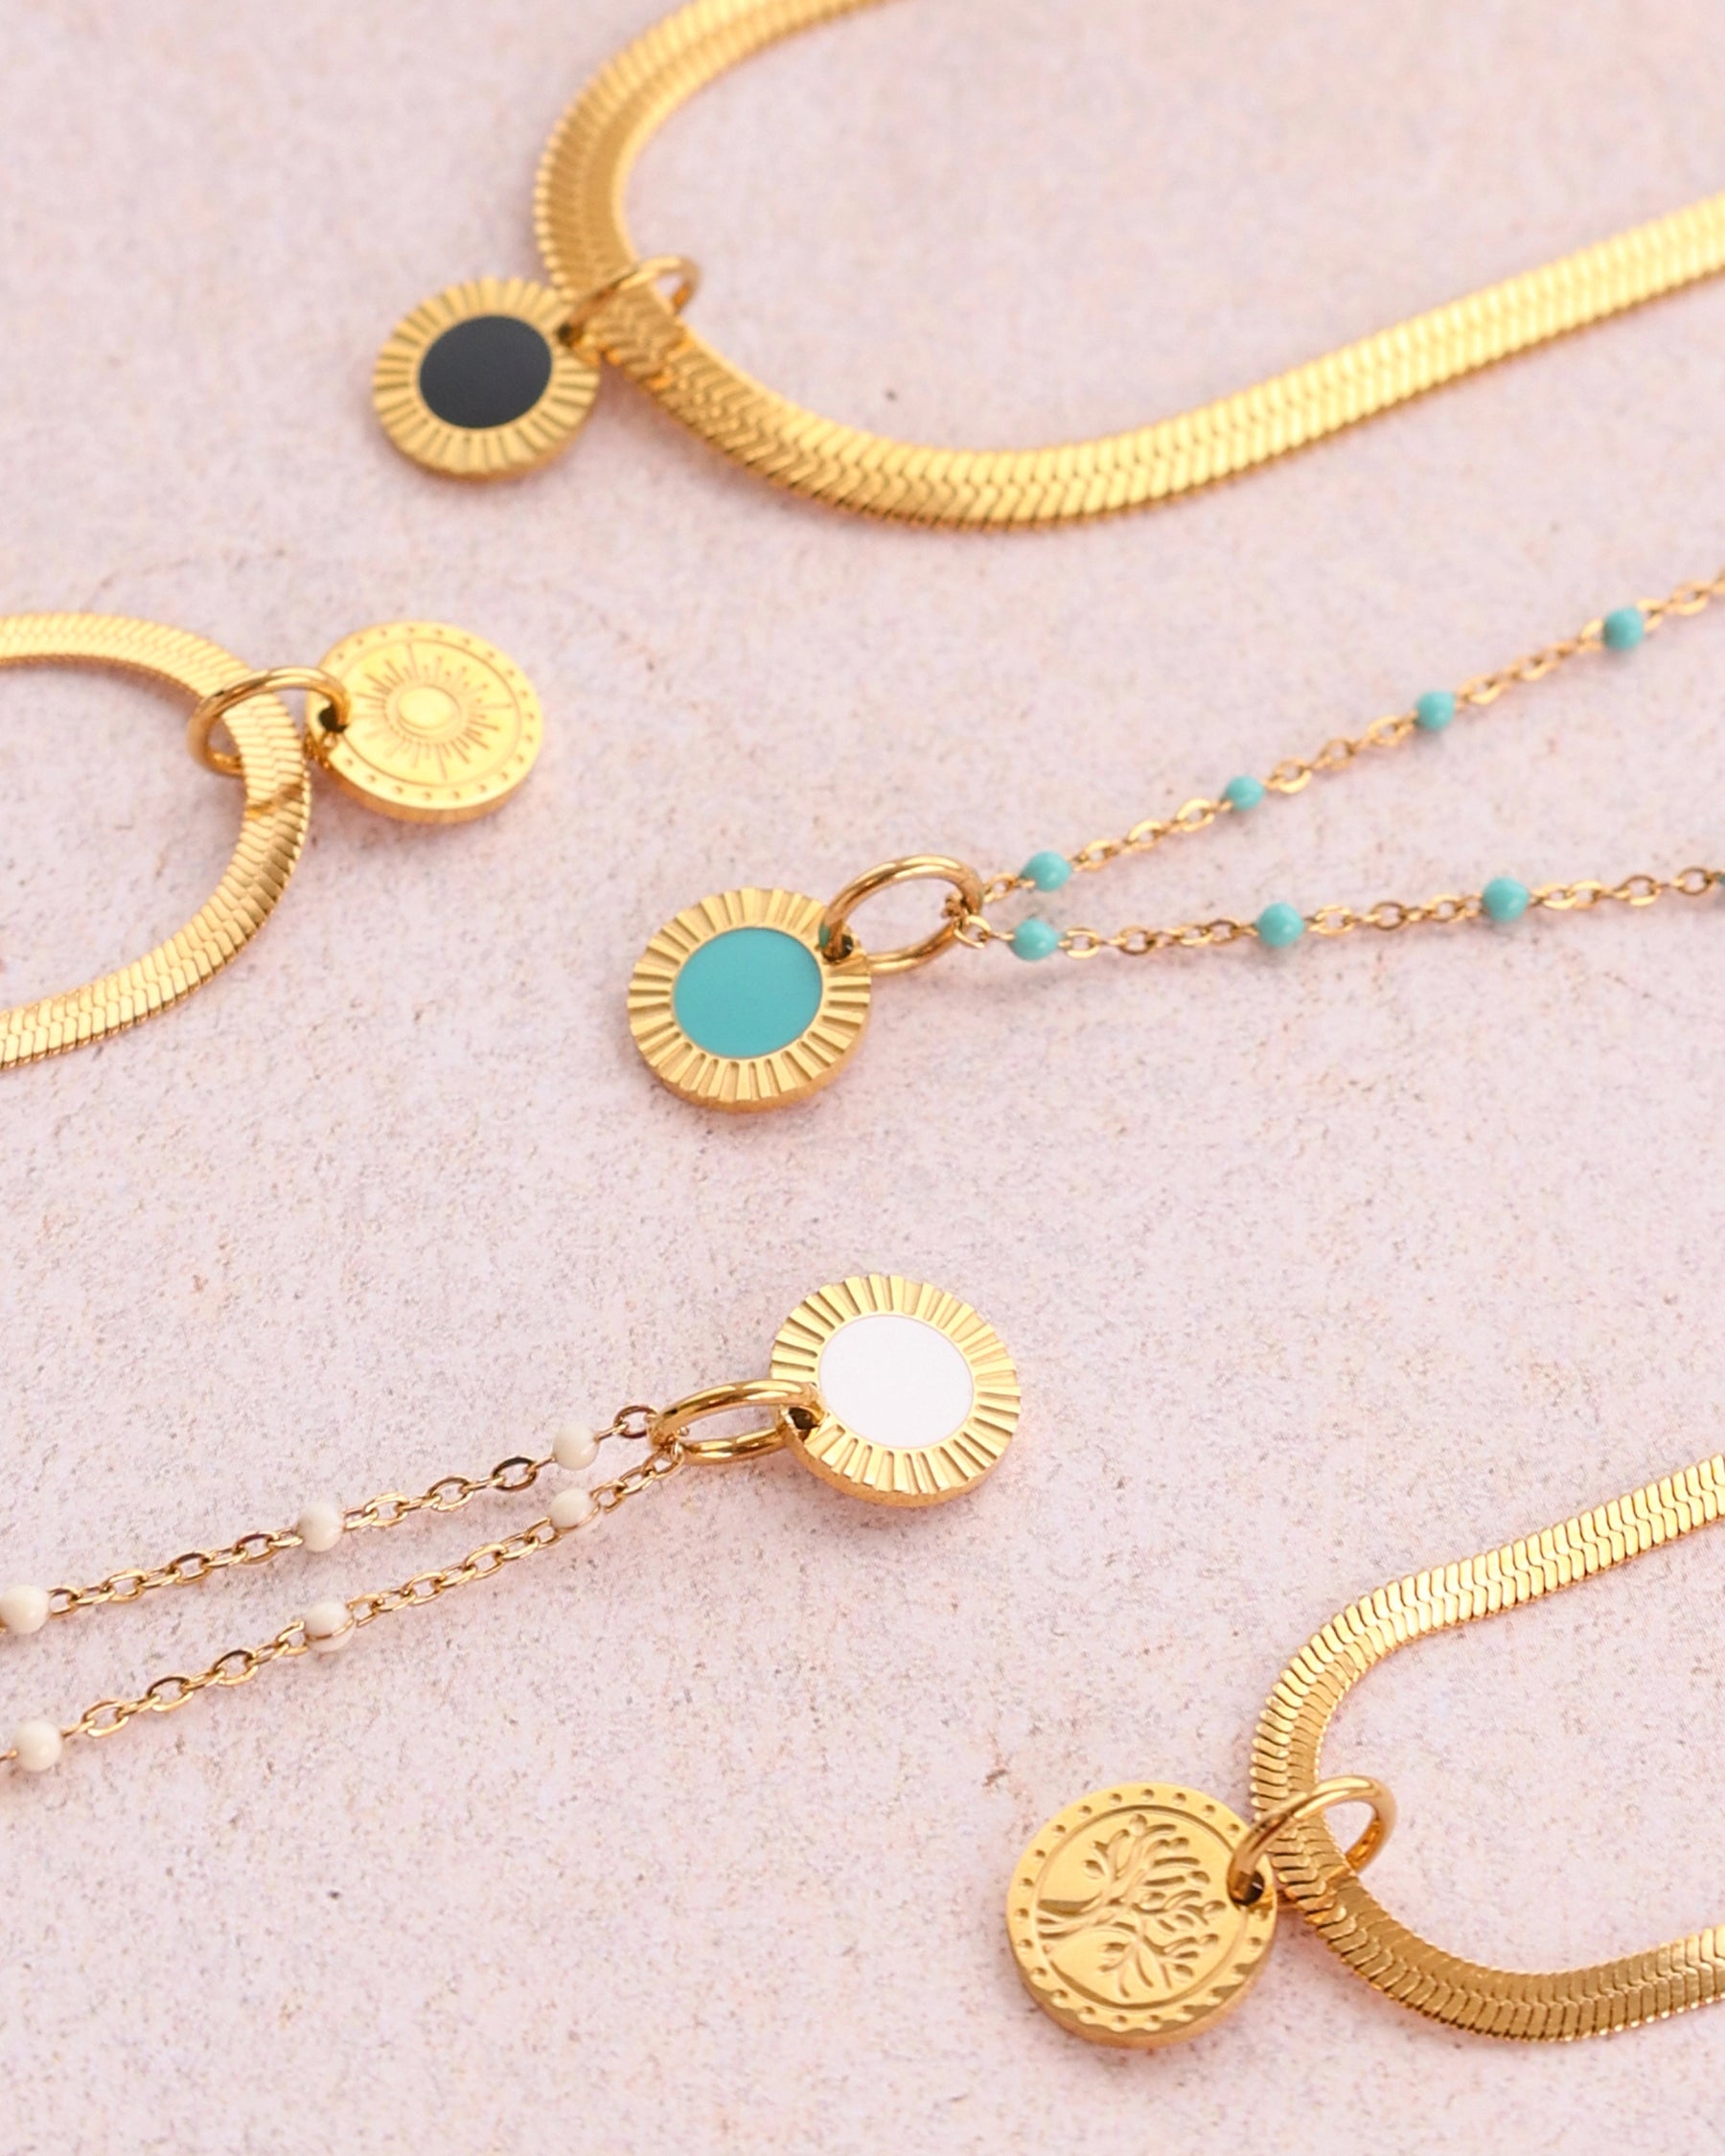 CUS® Jewellery Set Mira necklace 3mm and Gaia charm Milky Quartz - Vitality & Purity